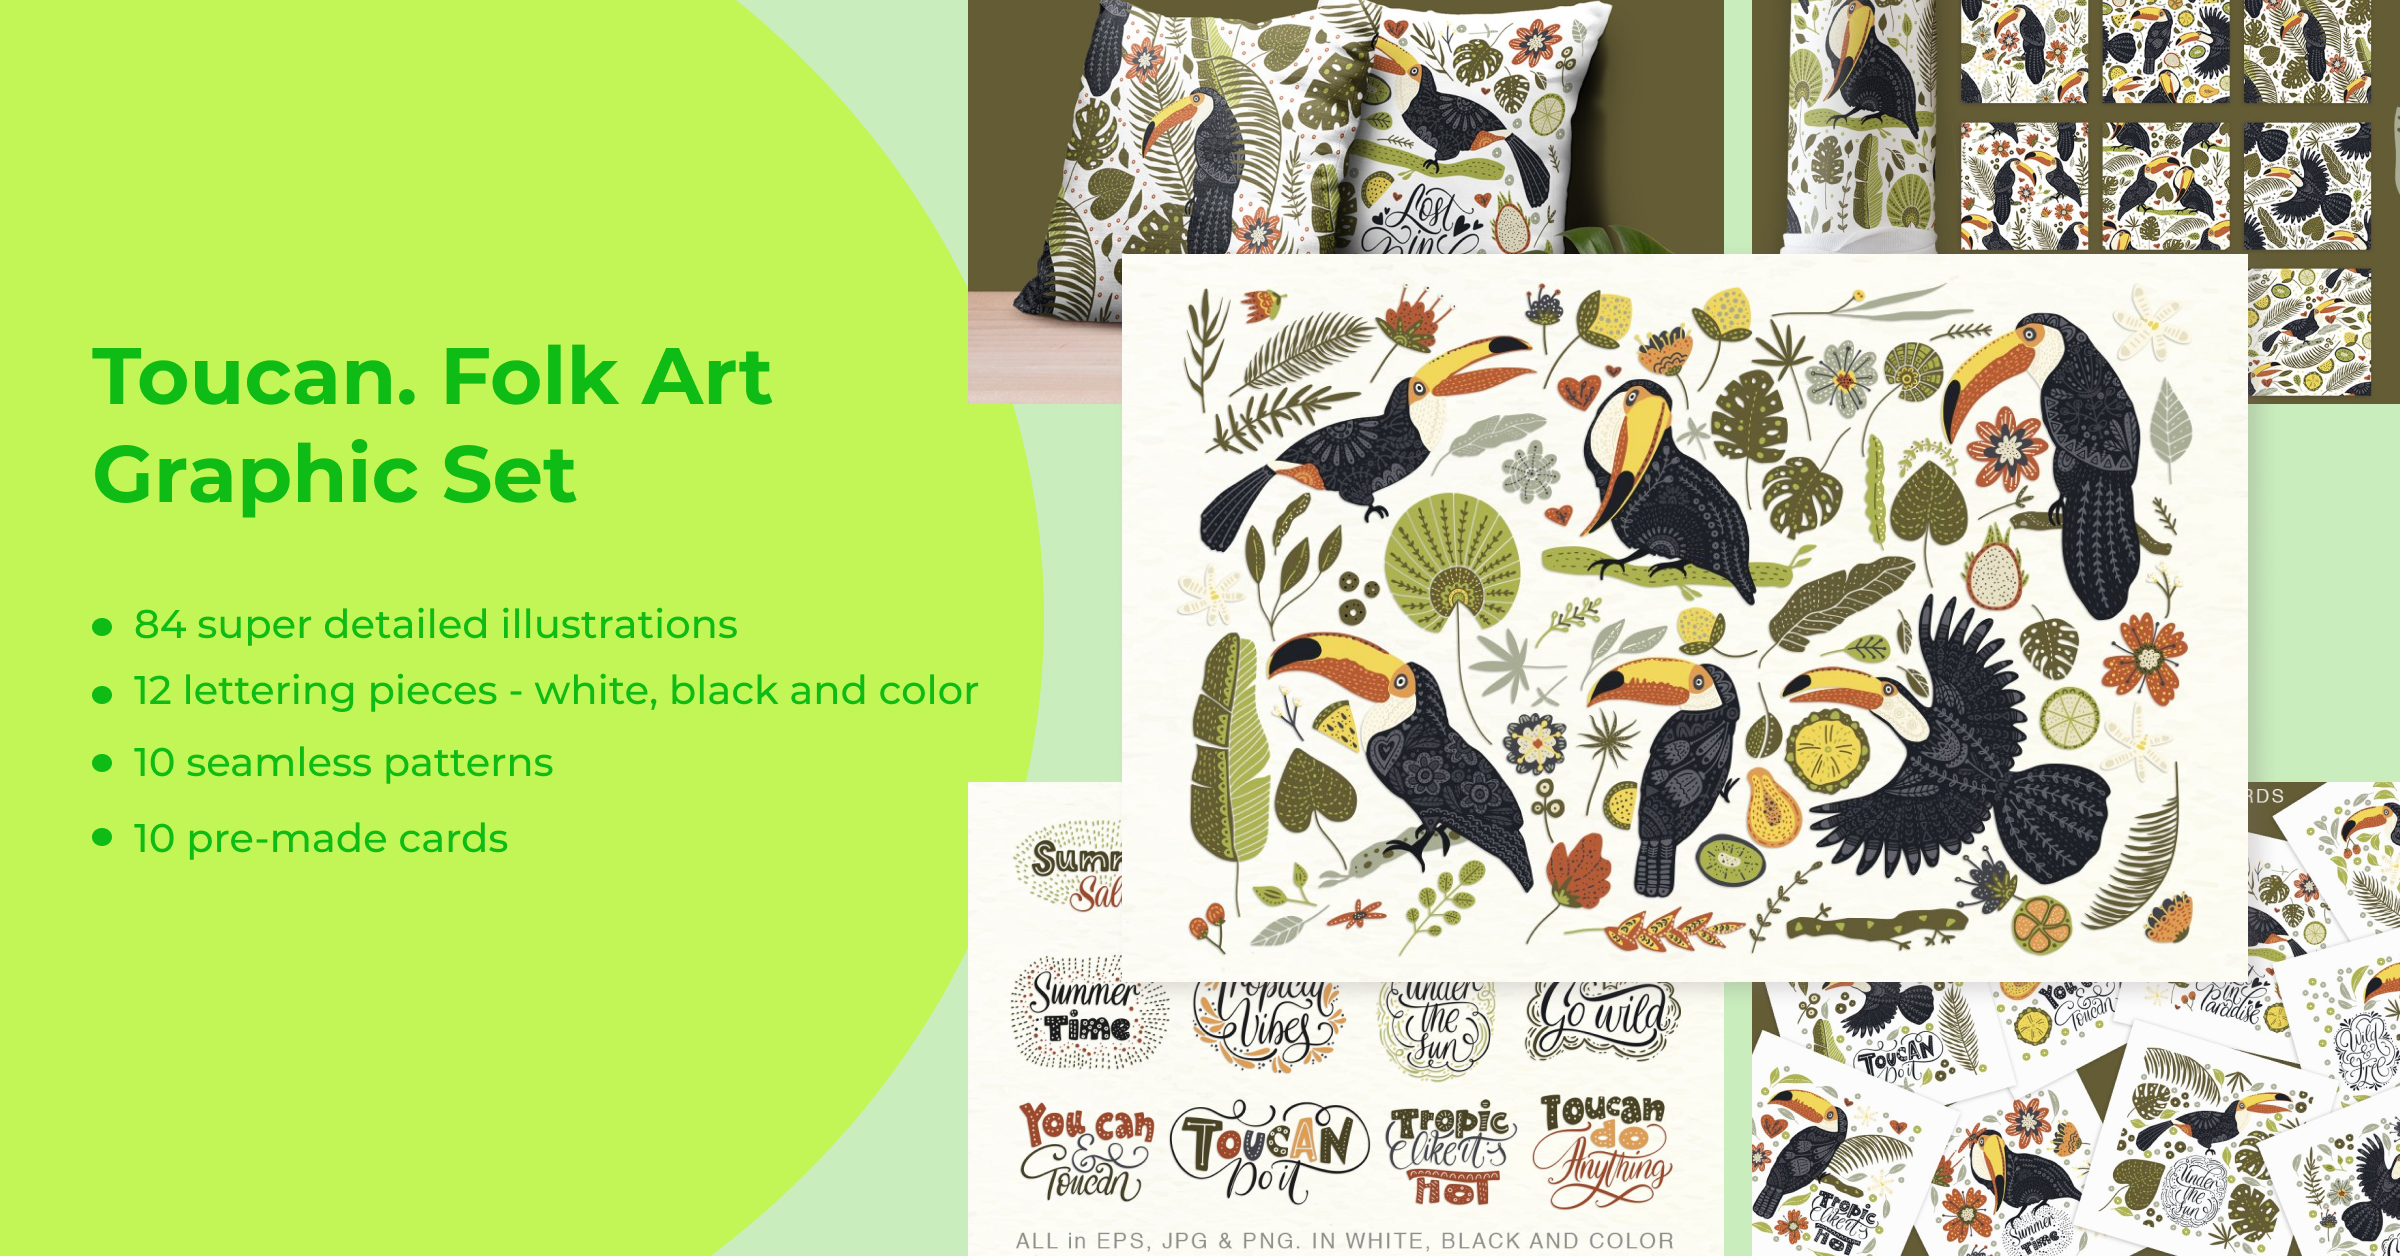 Toucan folk art graphic set.